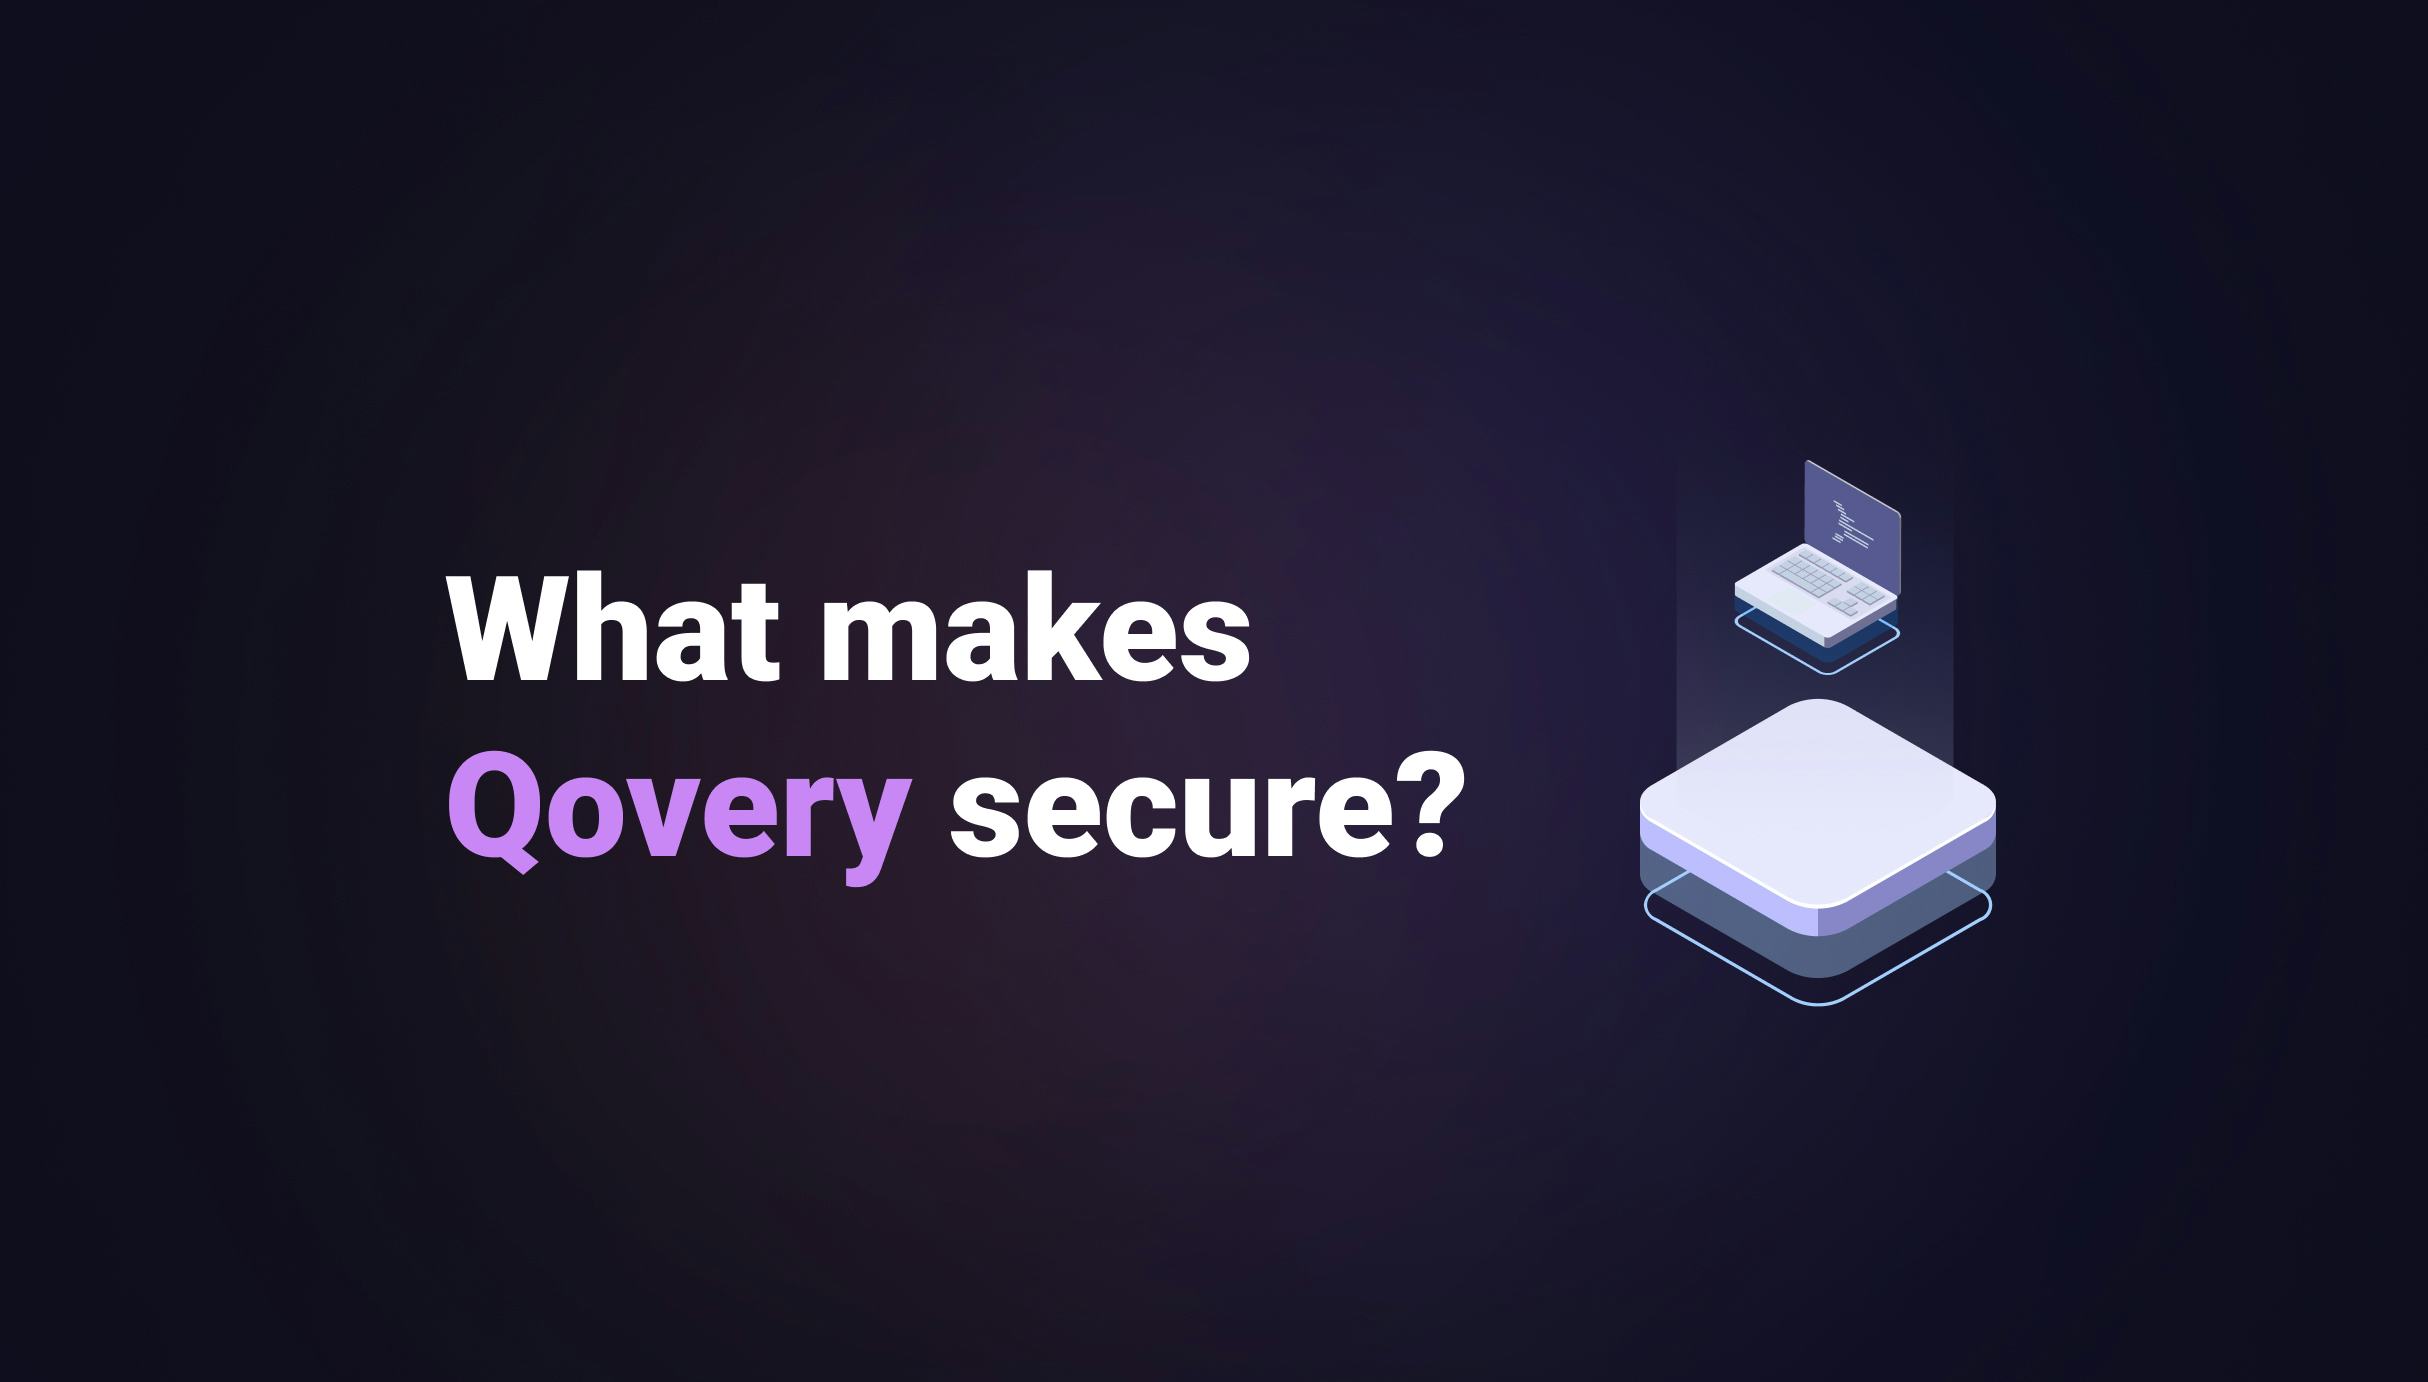 What makes Qovery secure? - Qovery